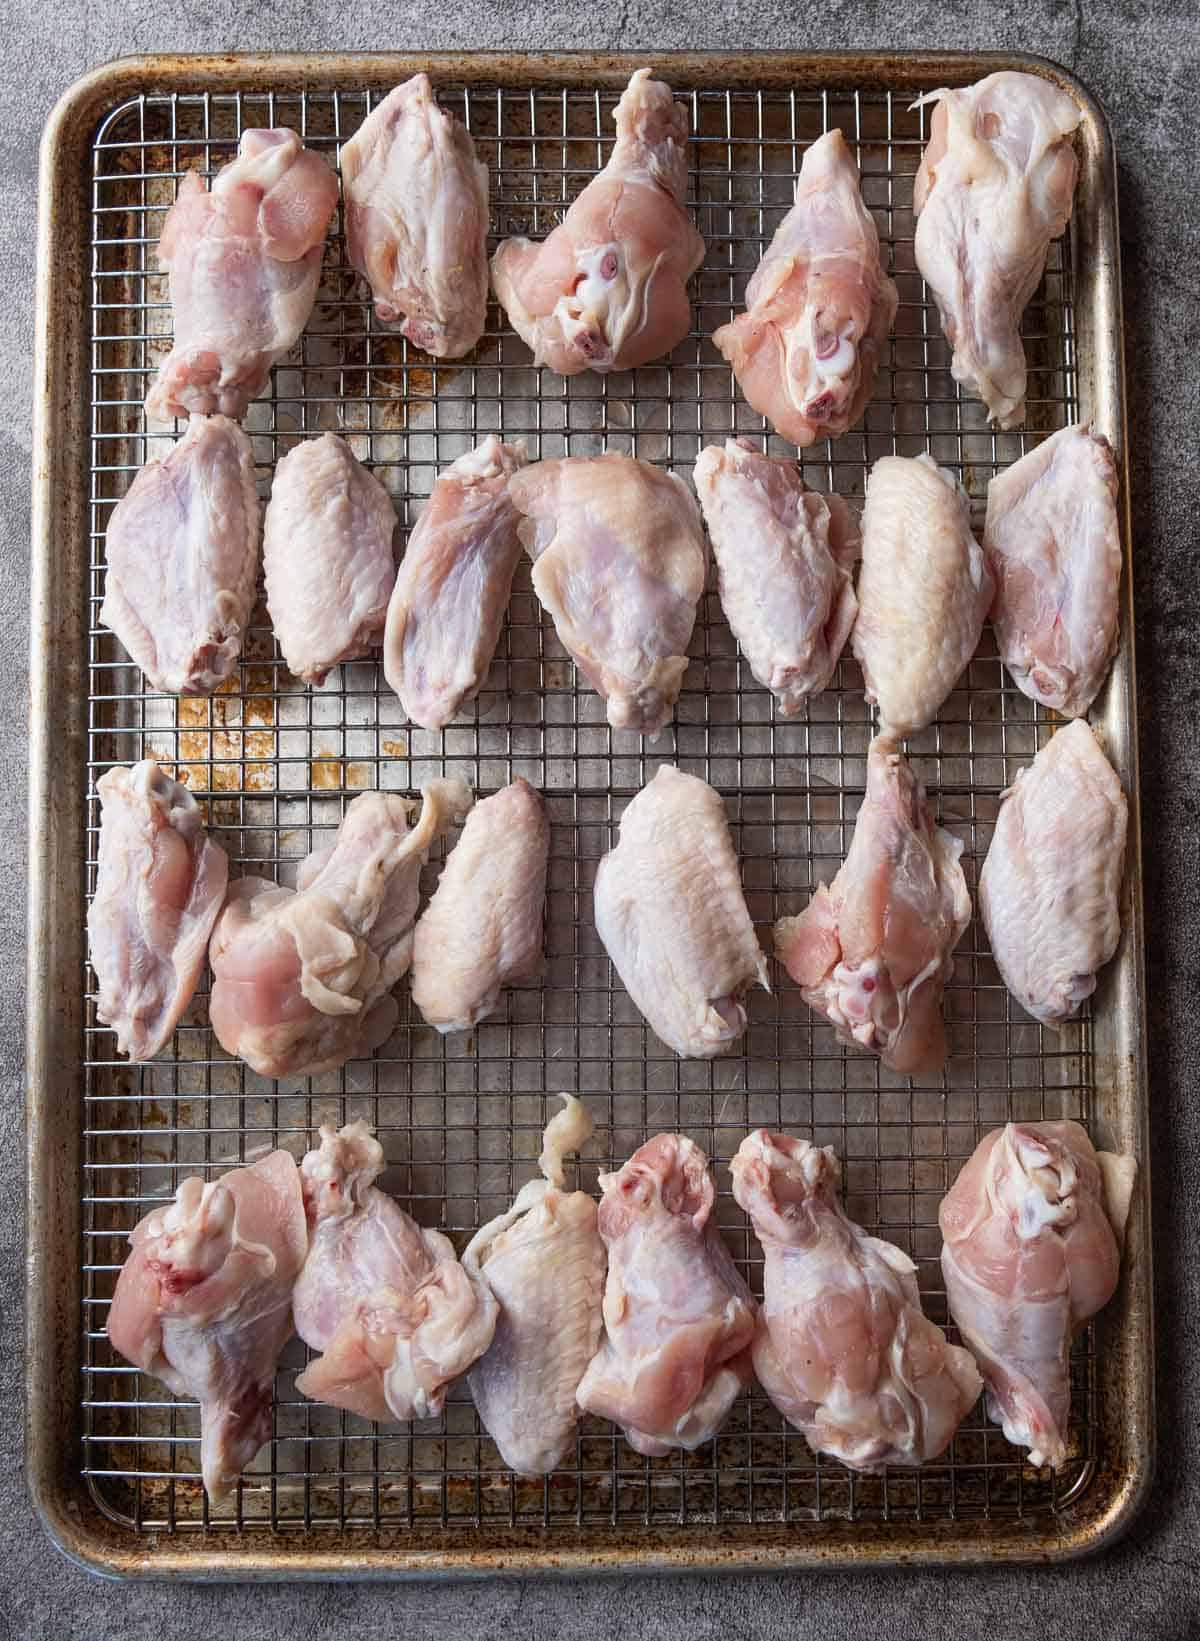 two dozen raw chicken wings on a baking sheet